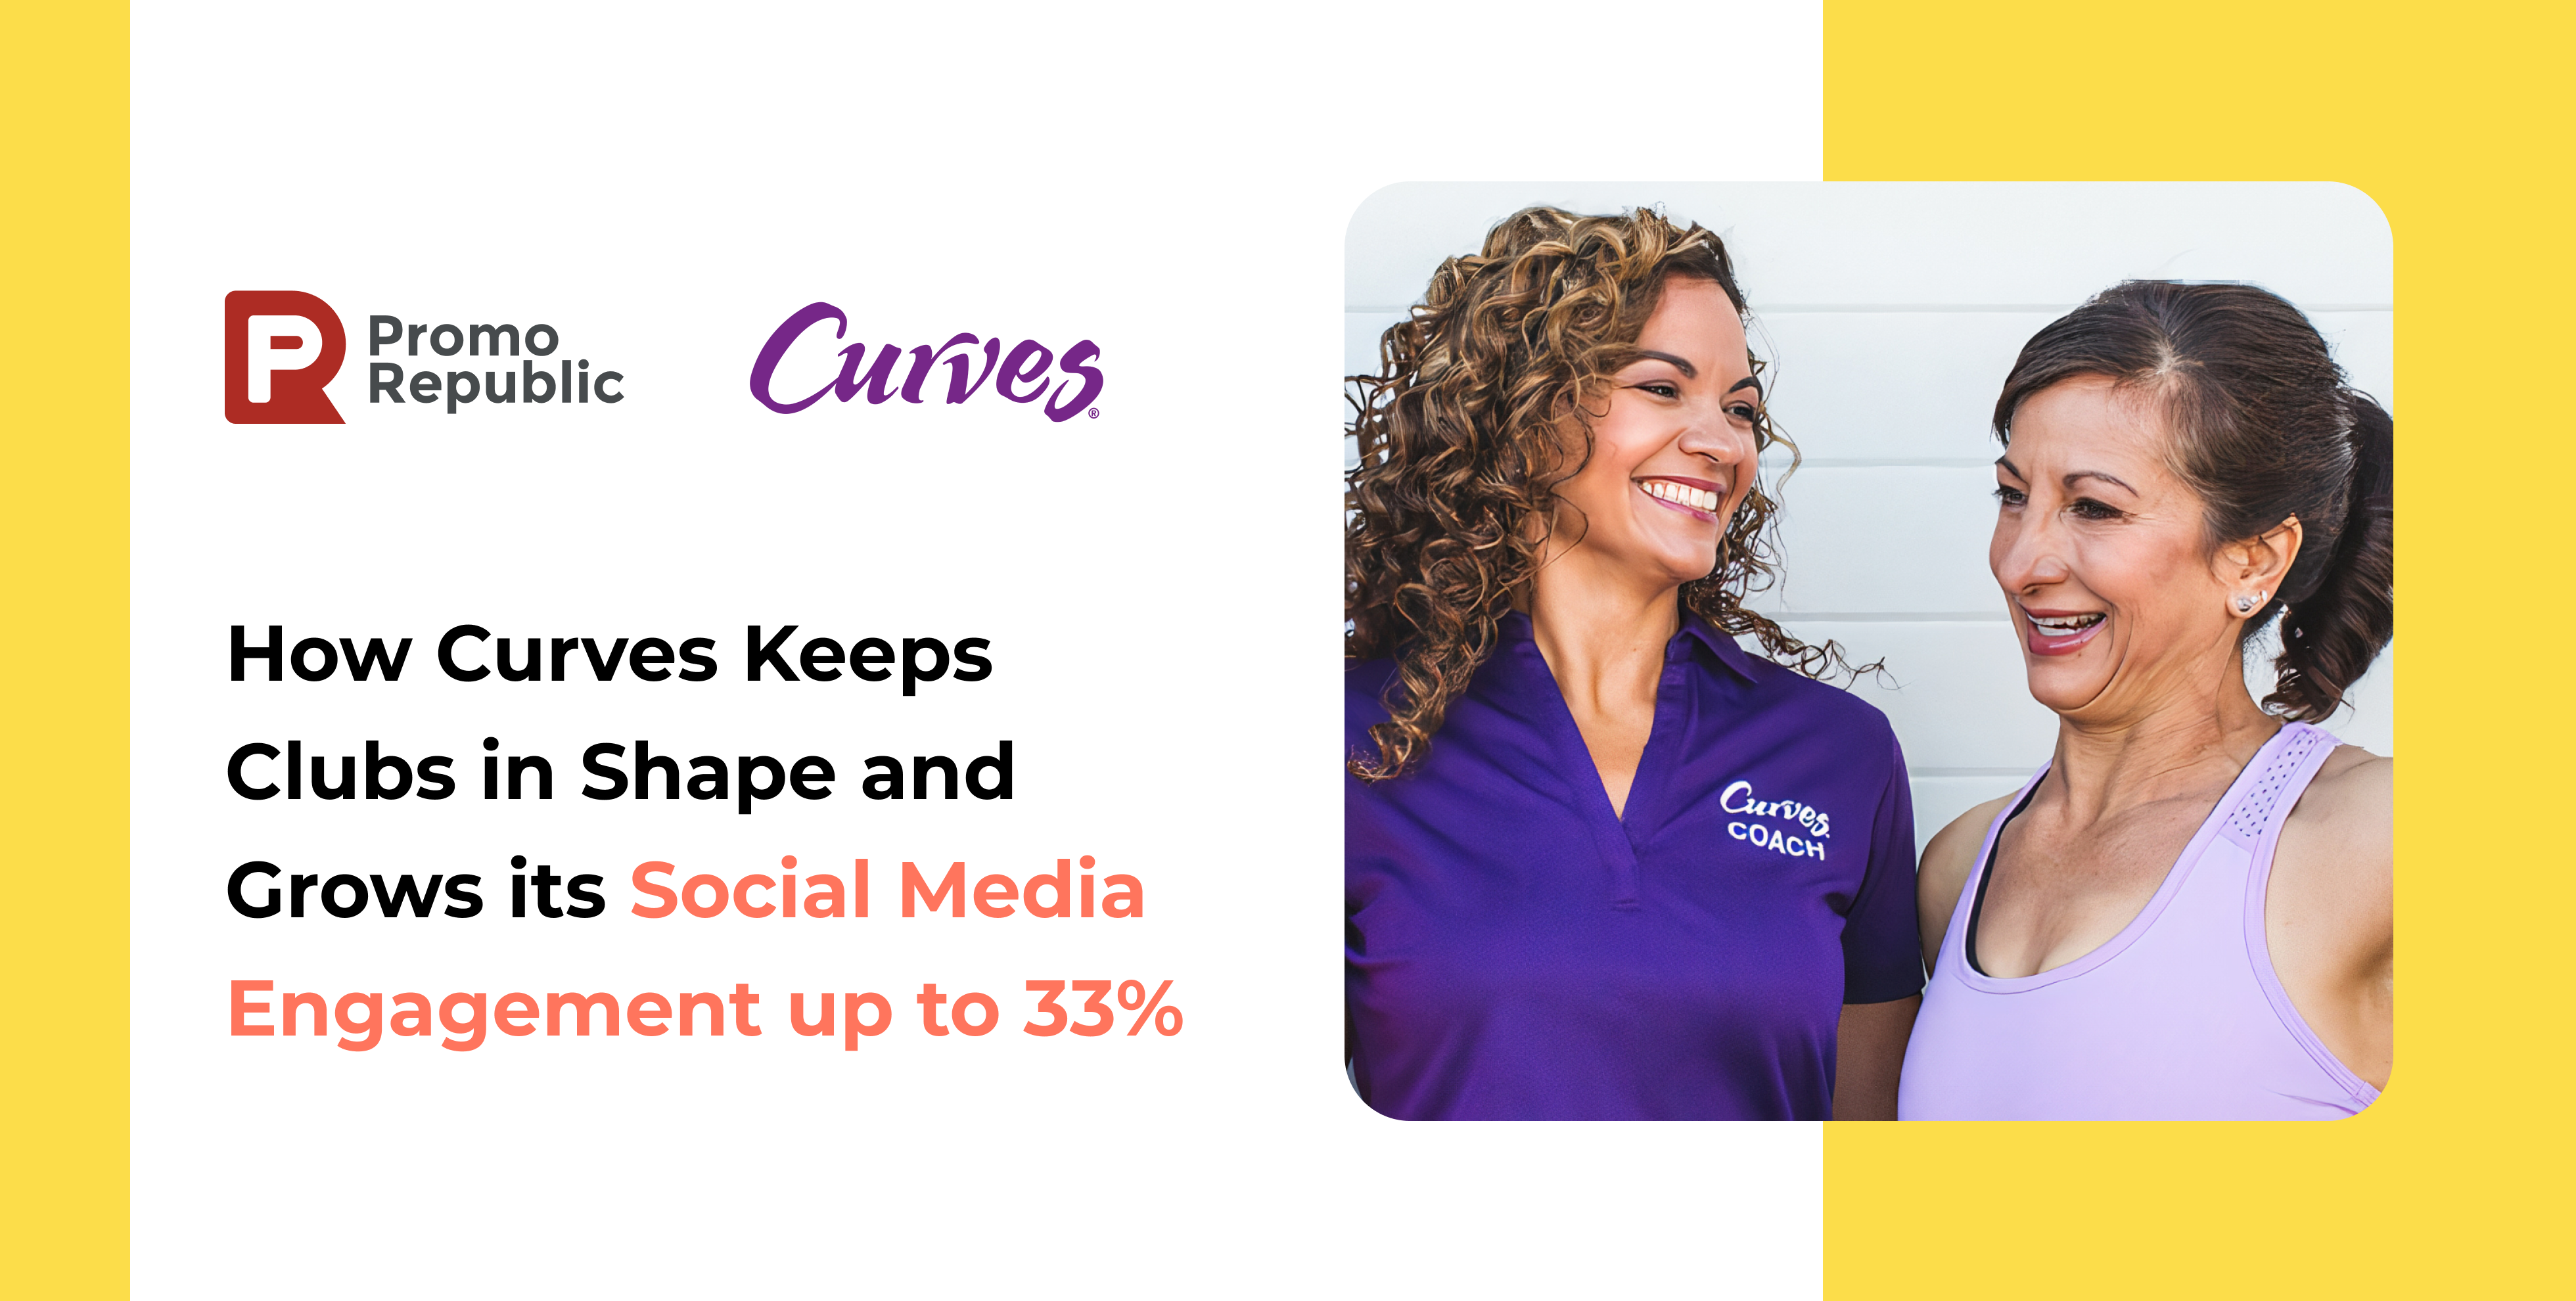 curves case study